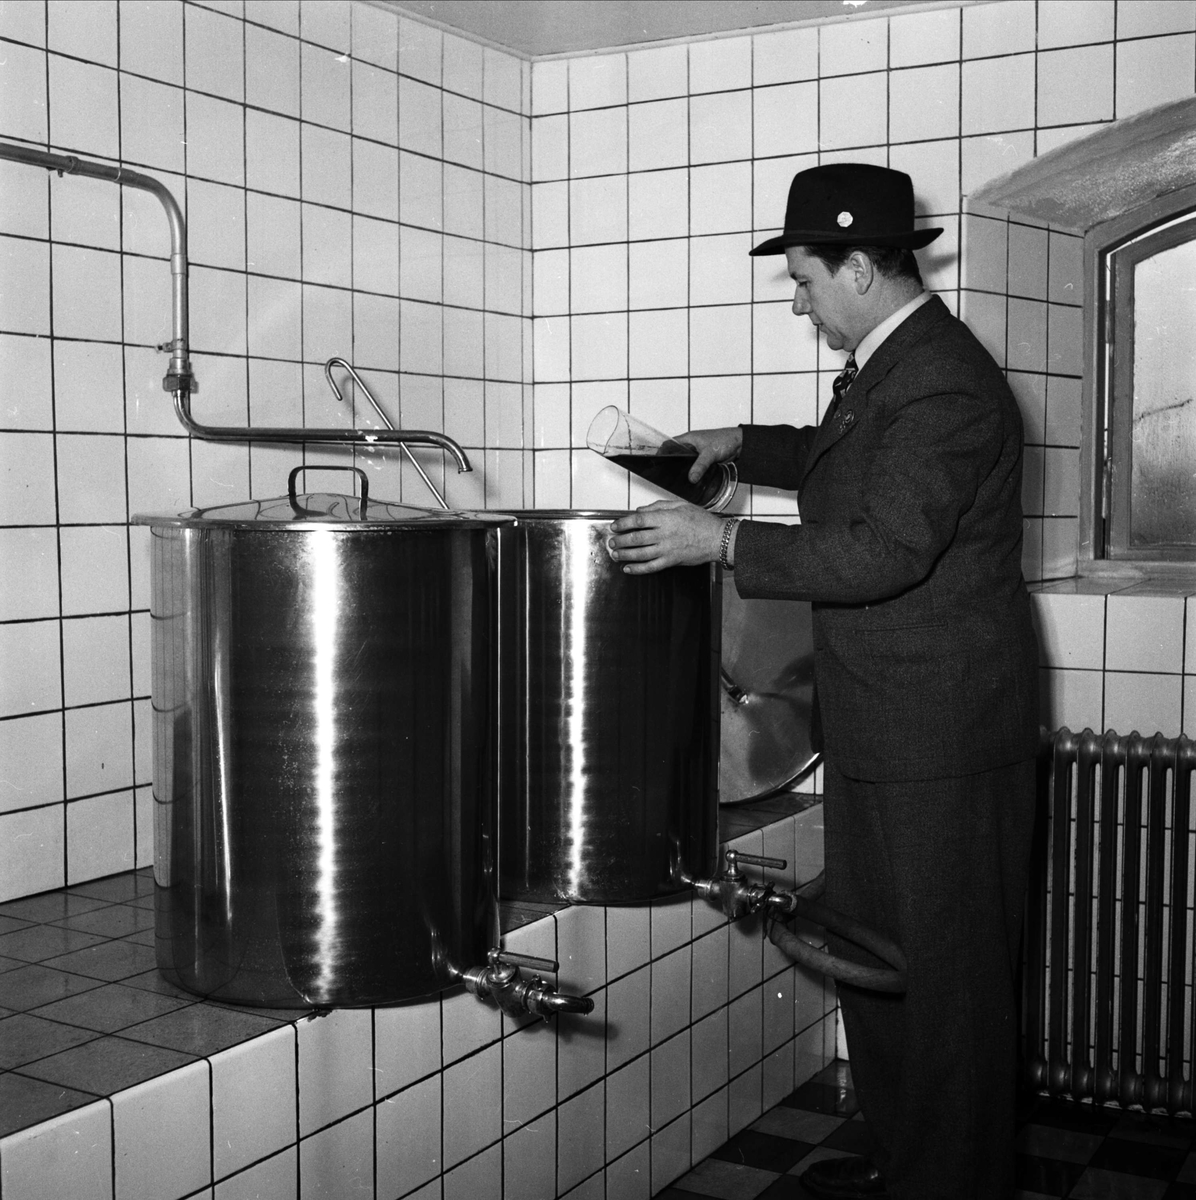 "Mejeri blev bryggeri", Storvreta Bryggeri, Rasbo, Uppland 1951. Sannolikt ägaren Rune Andersson i laboratoriet